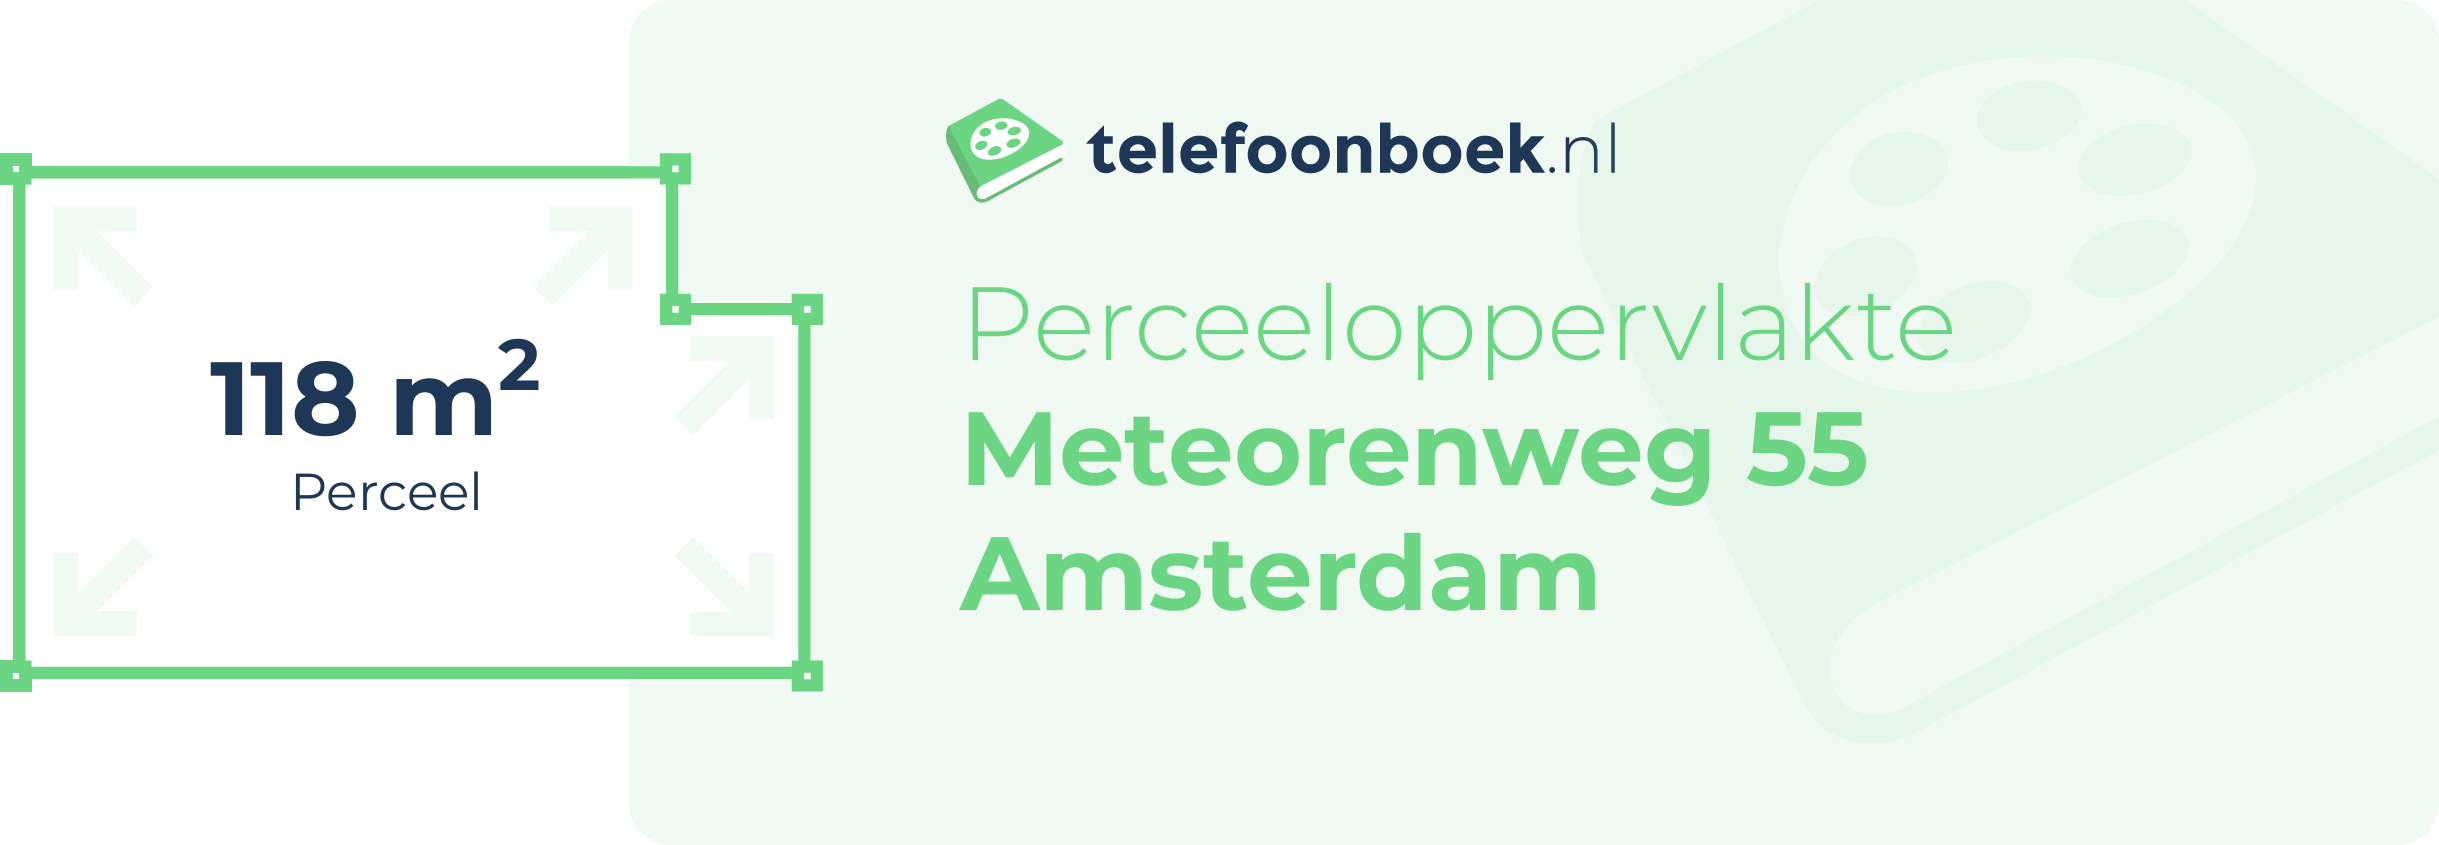 Perceeloppervlakte Meteorenweg 55 Amsterdam